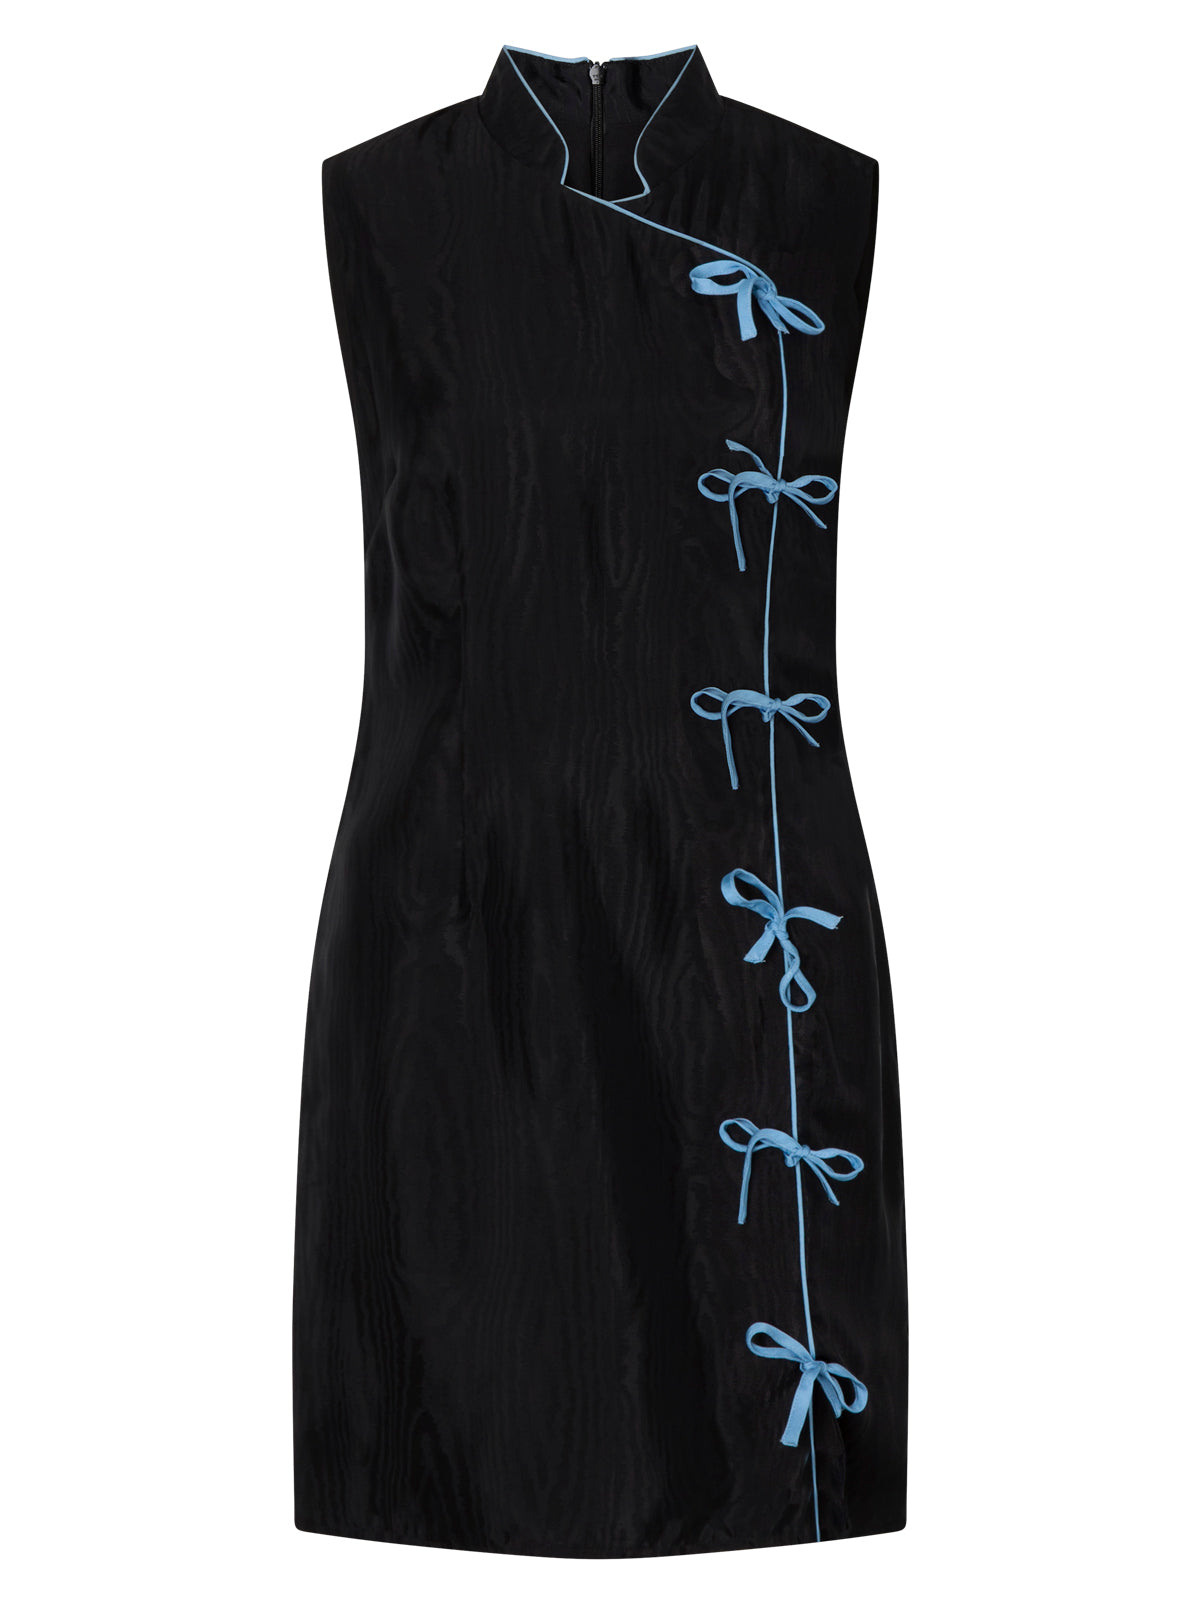 Aubrey Black Mini Dress By KITRI Studio